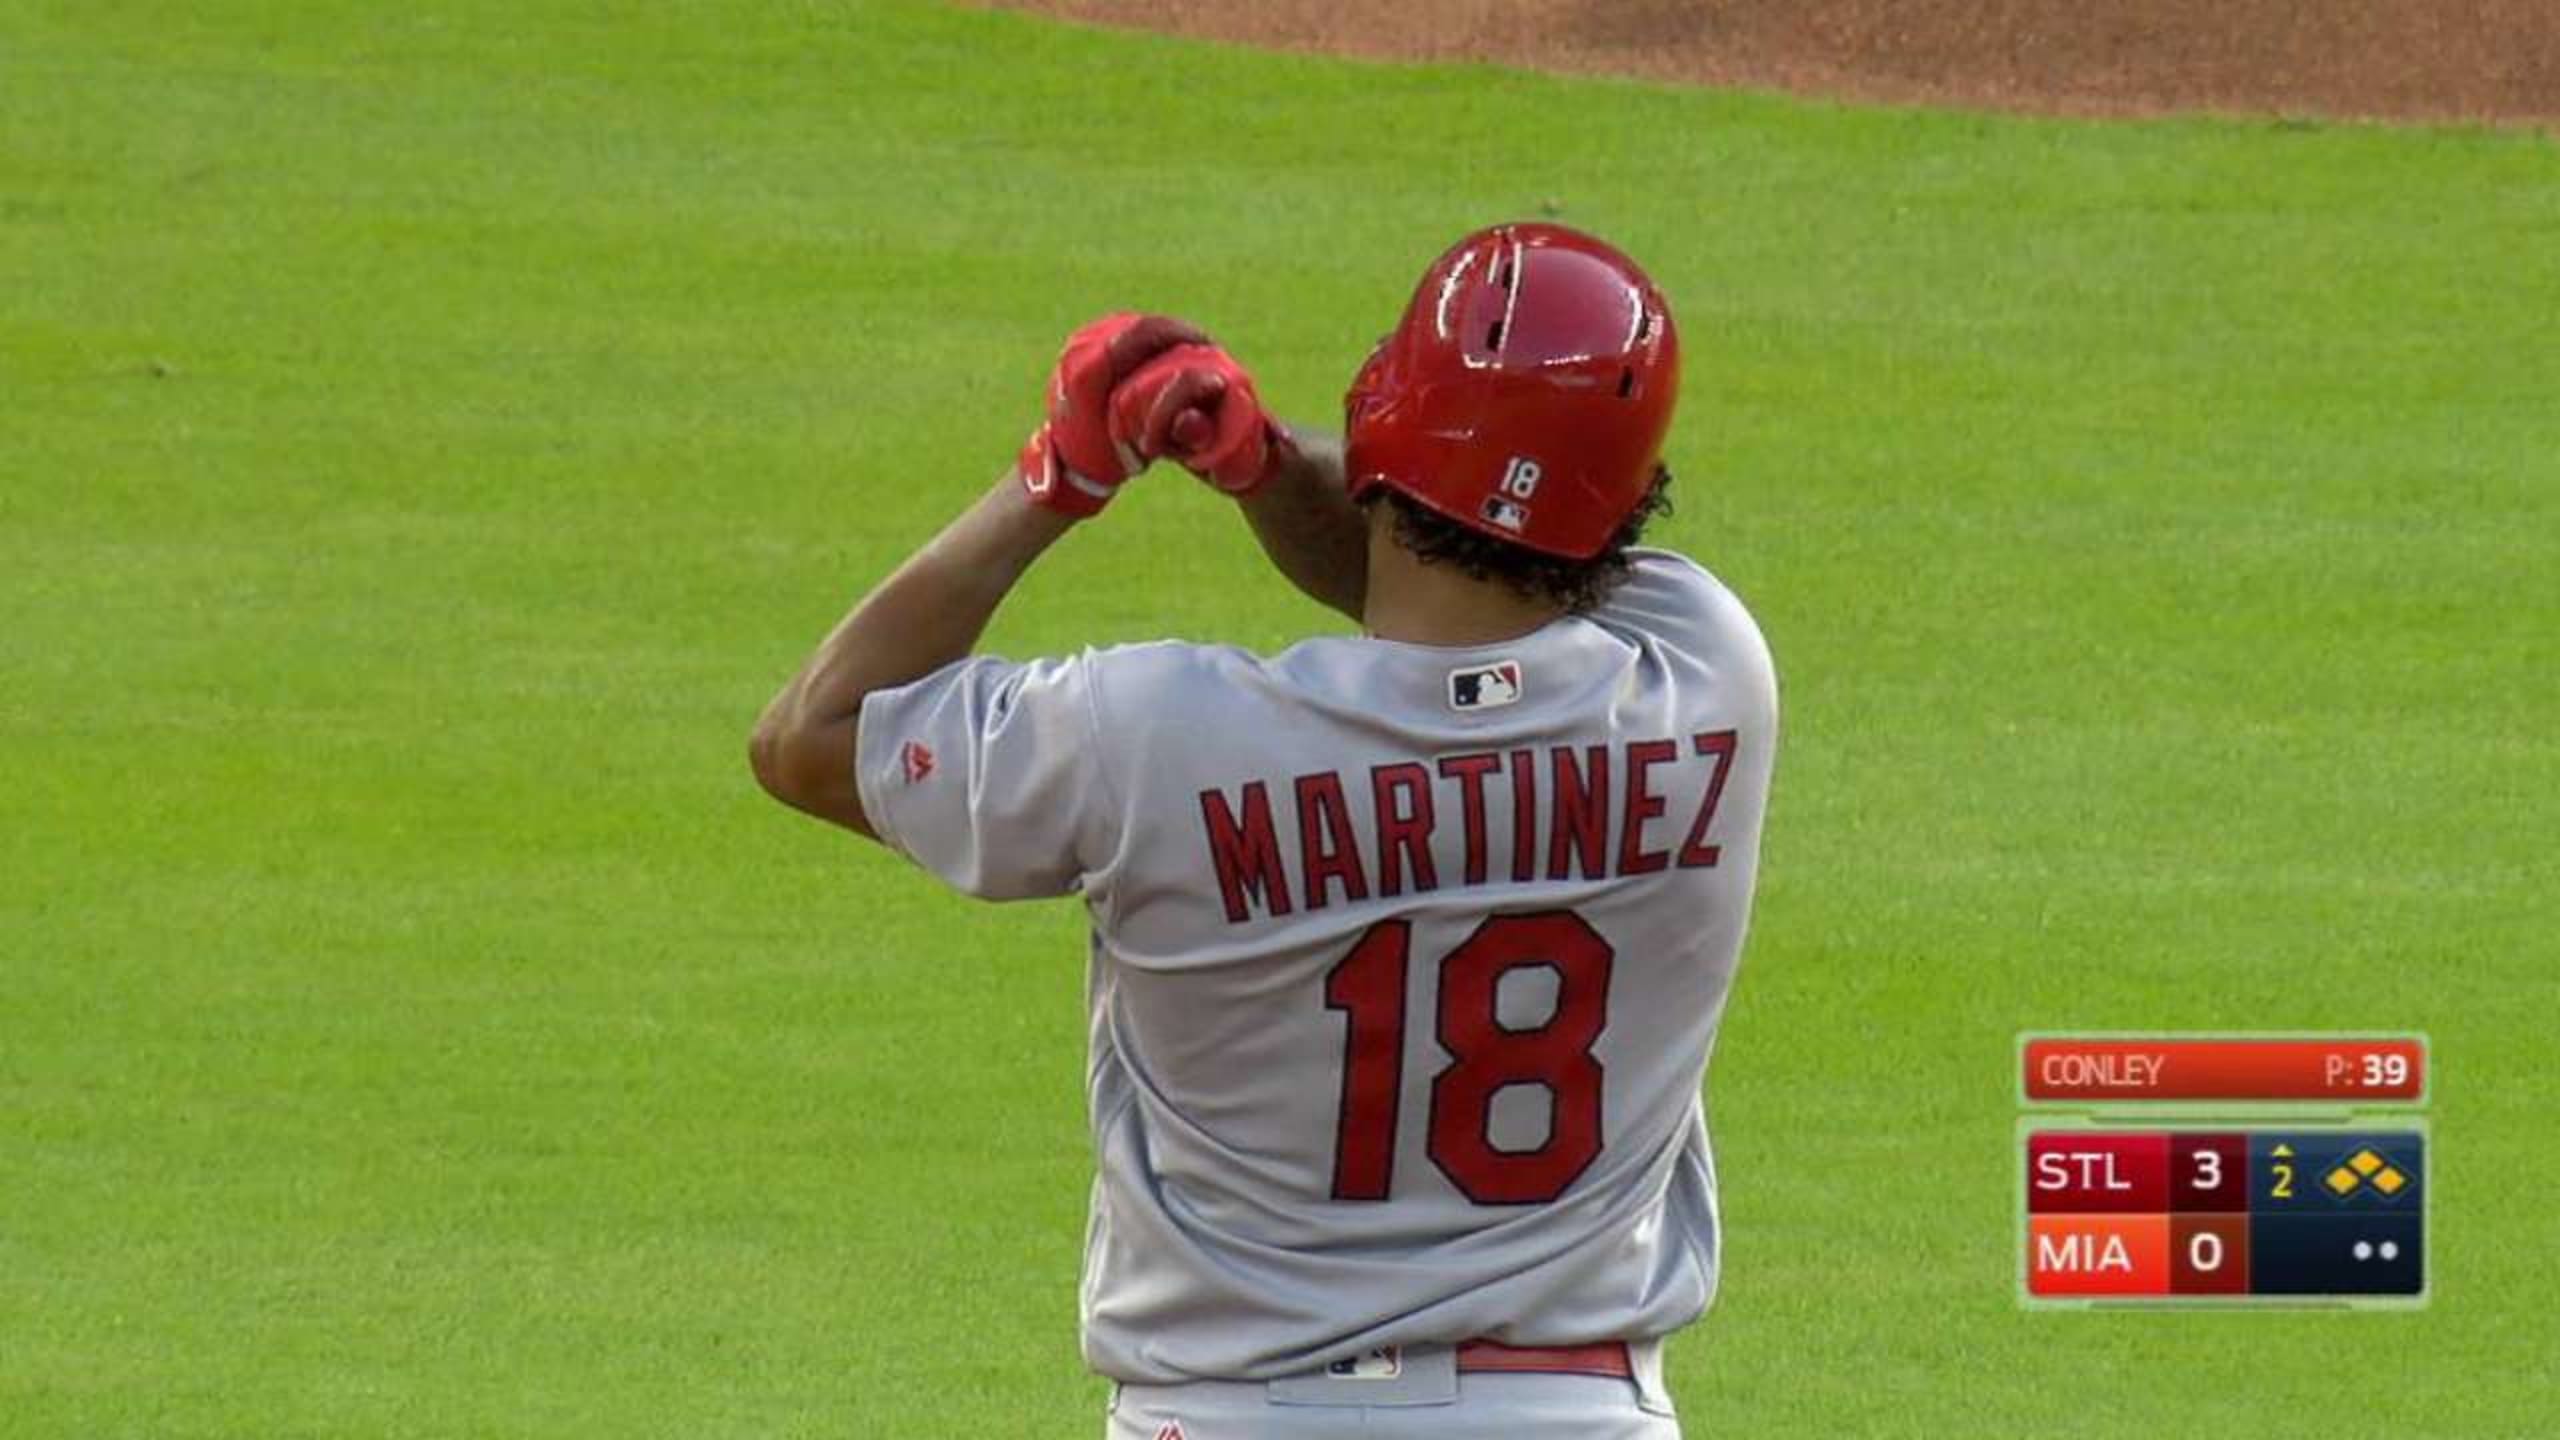 Martinez pitches gem in 5-2 win over Phillies - Viva El Birdos